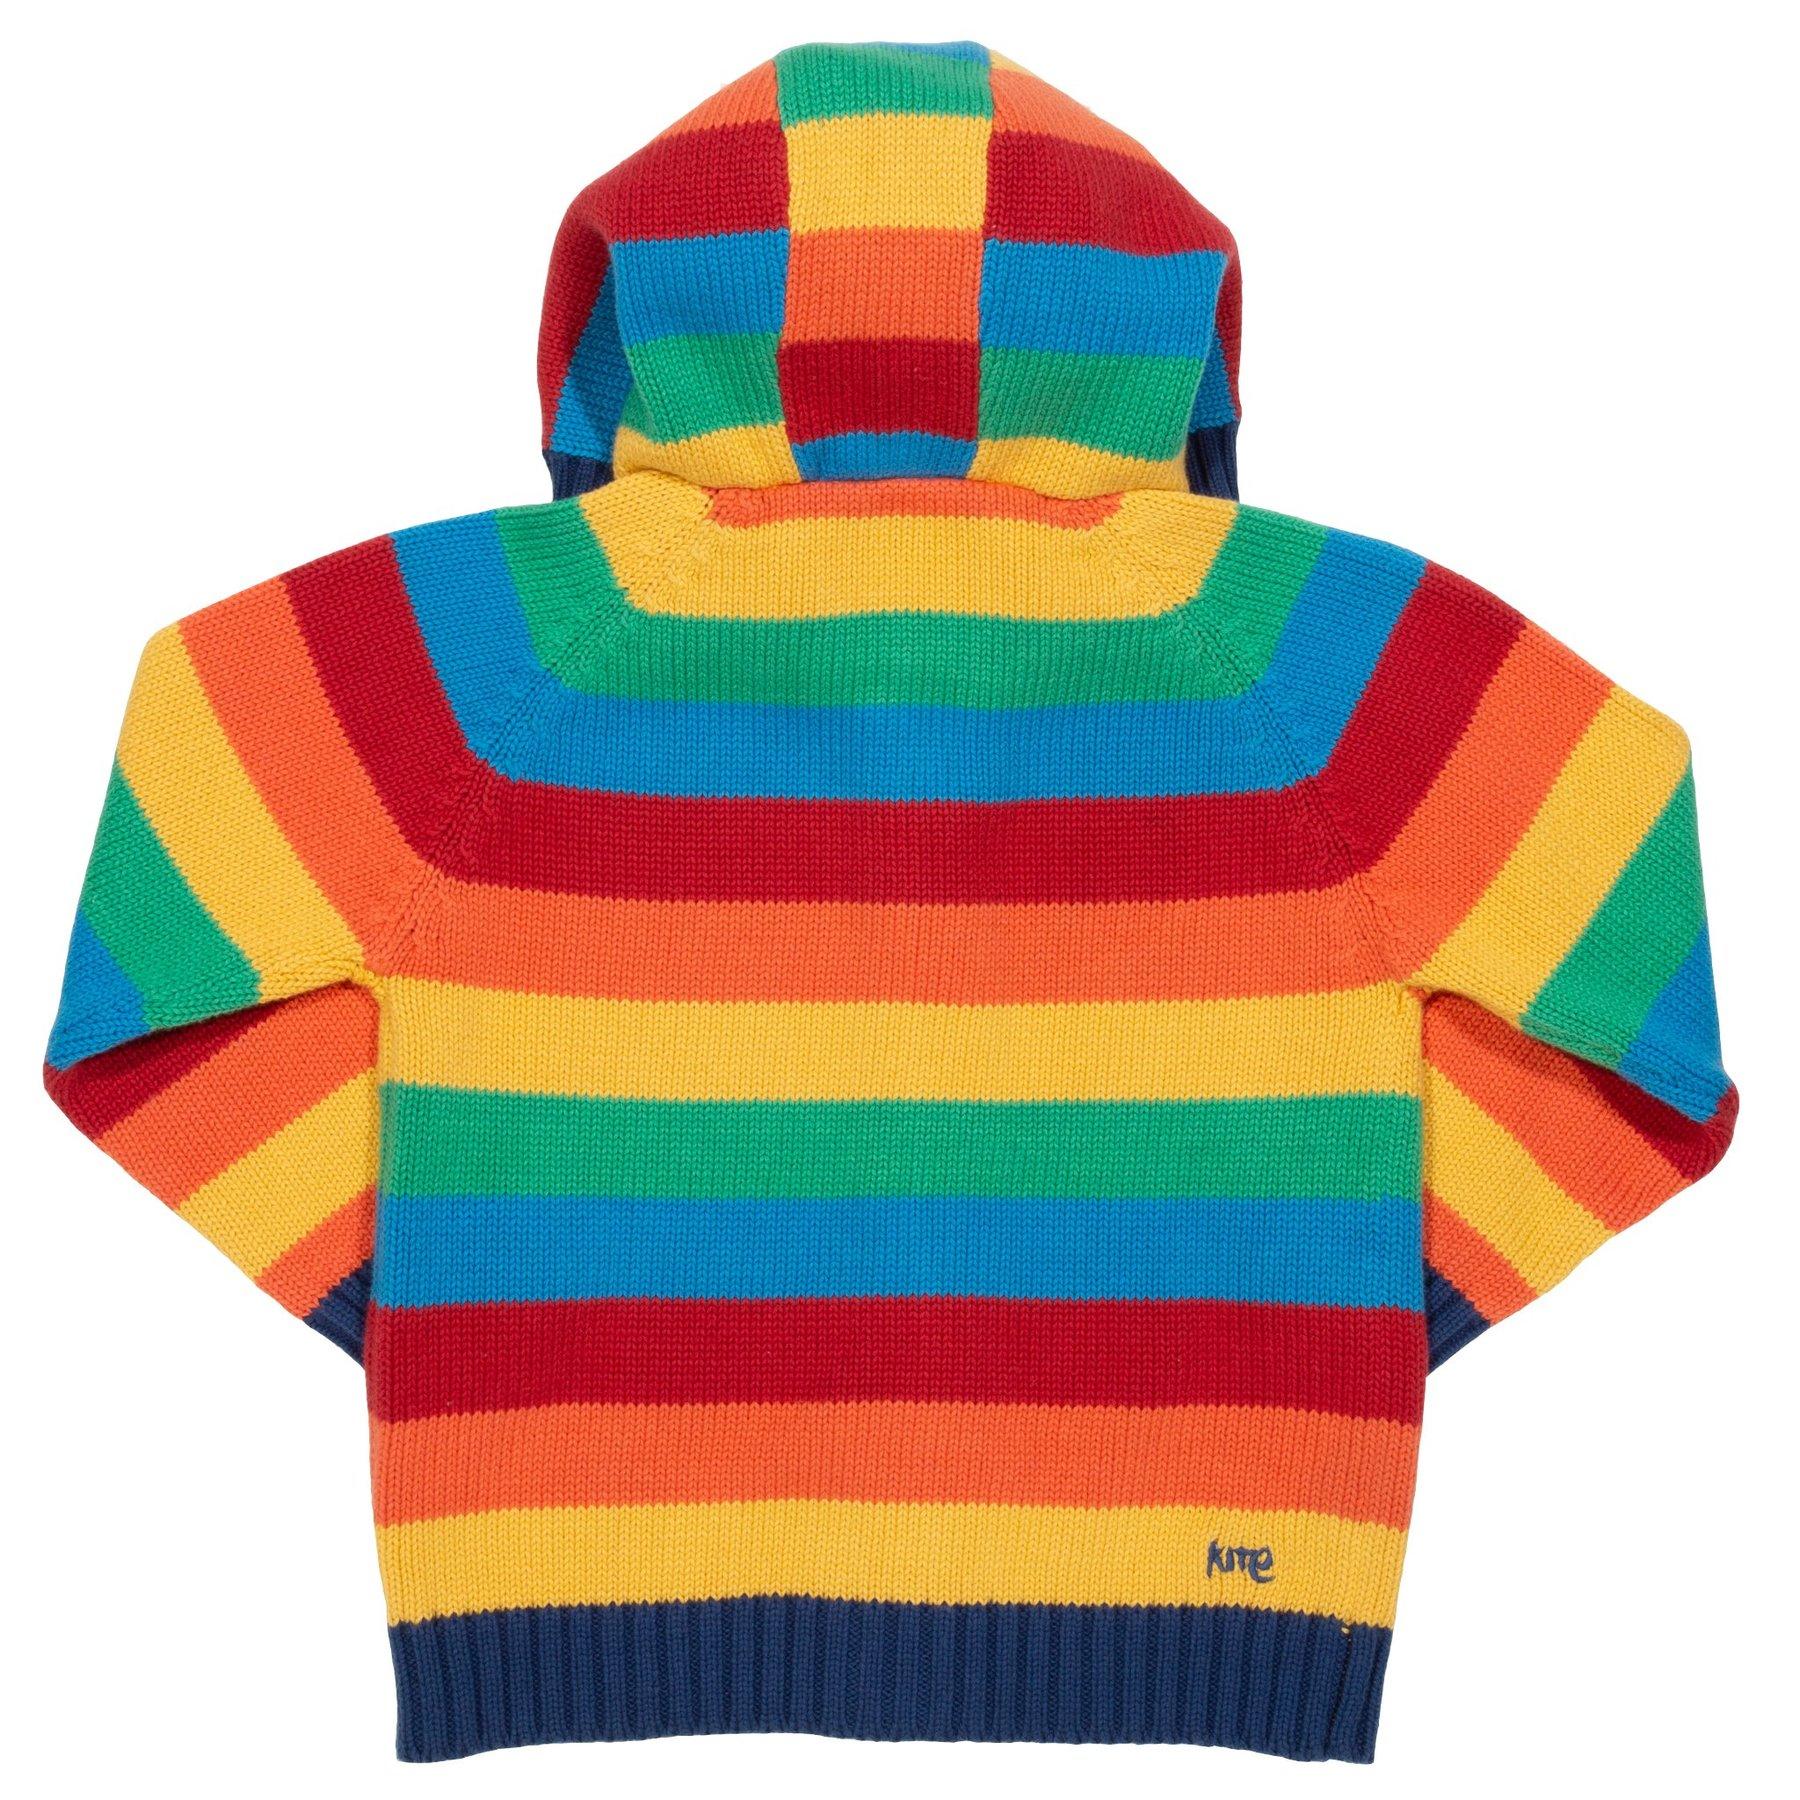 Kite Clothing Rainbow Knit Hoody back